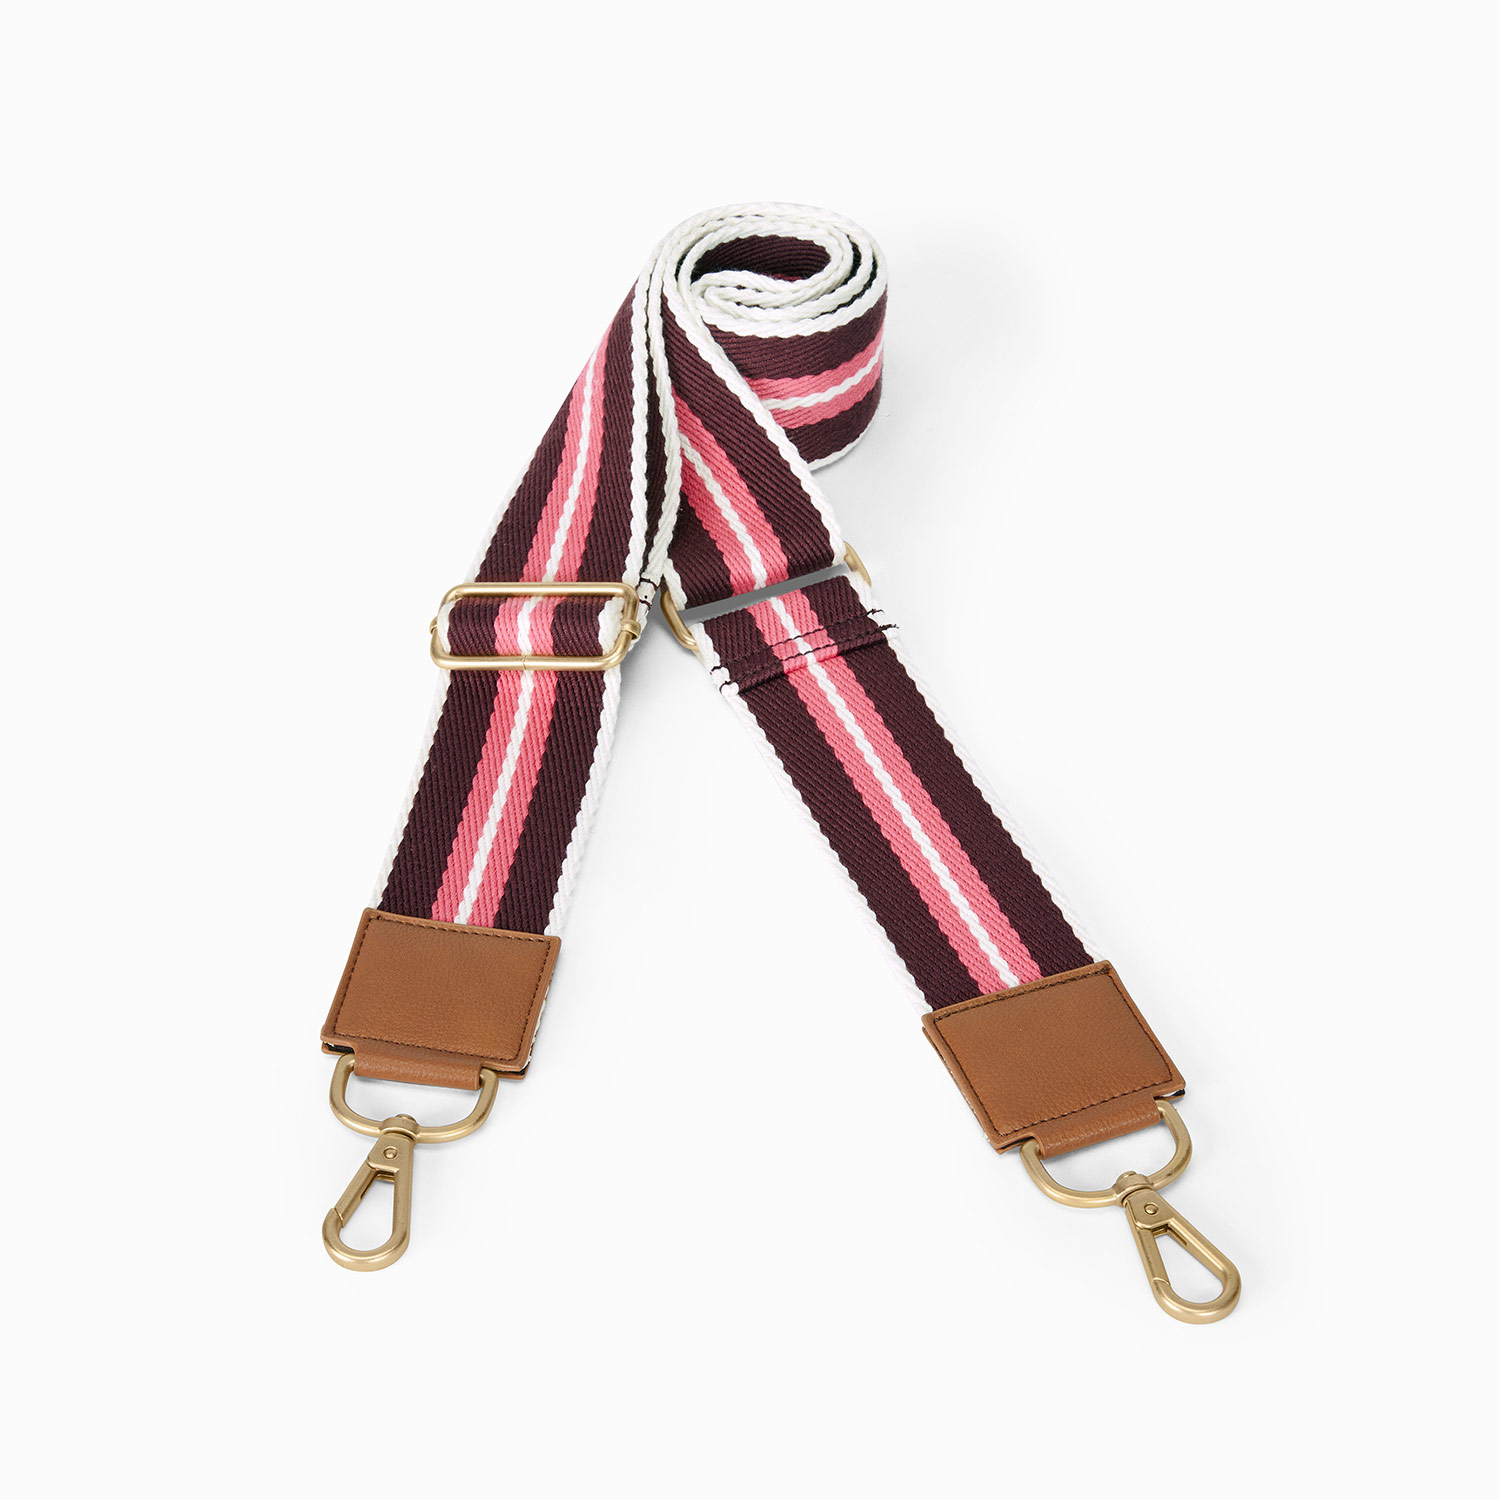 Buy Wide Shoulder Strap Personalized Print Adjustable Replacement Belt  Crossbody Canvas Bag Handbag-Pink Fans at Amazon.in